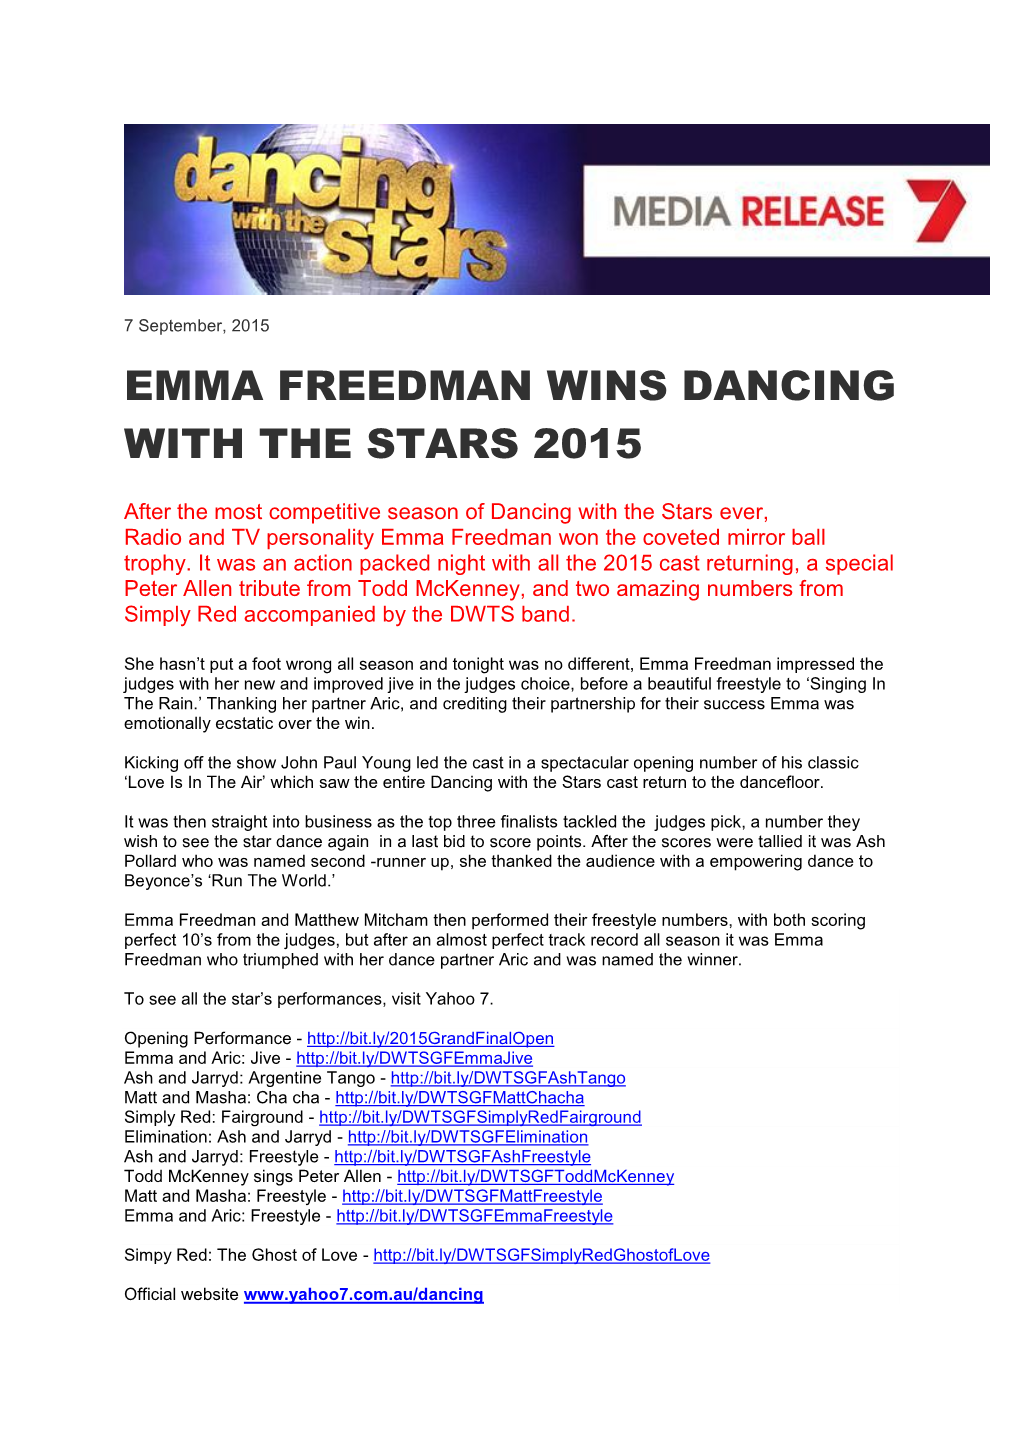 Emma Freedman Wins Dancing with the Stars 2015